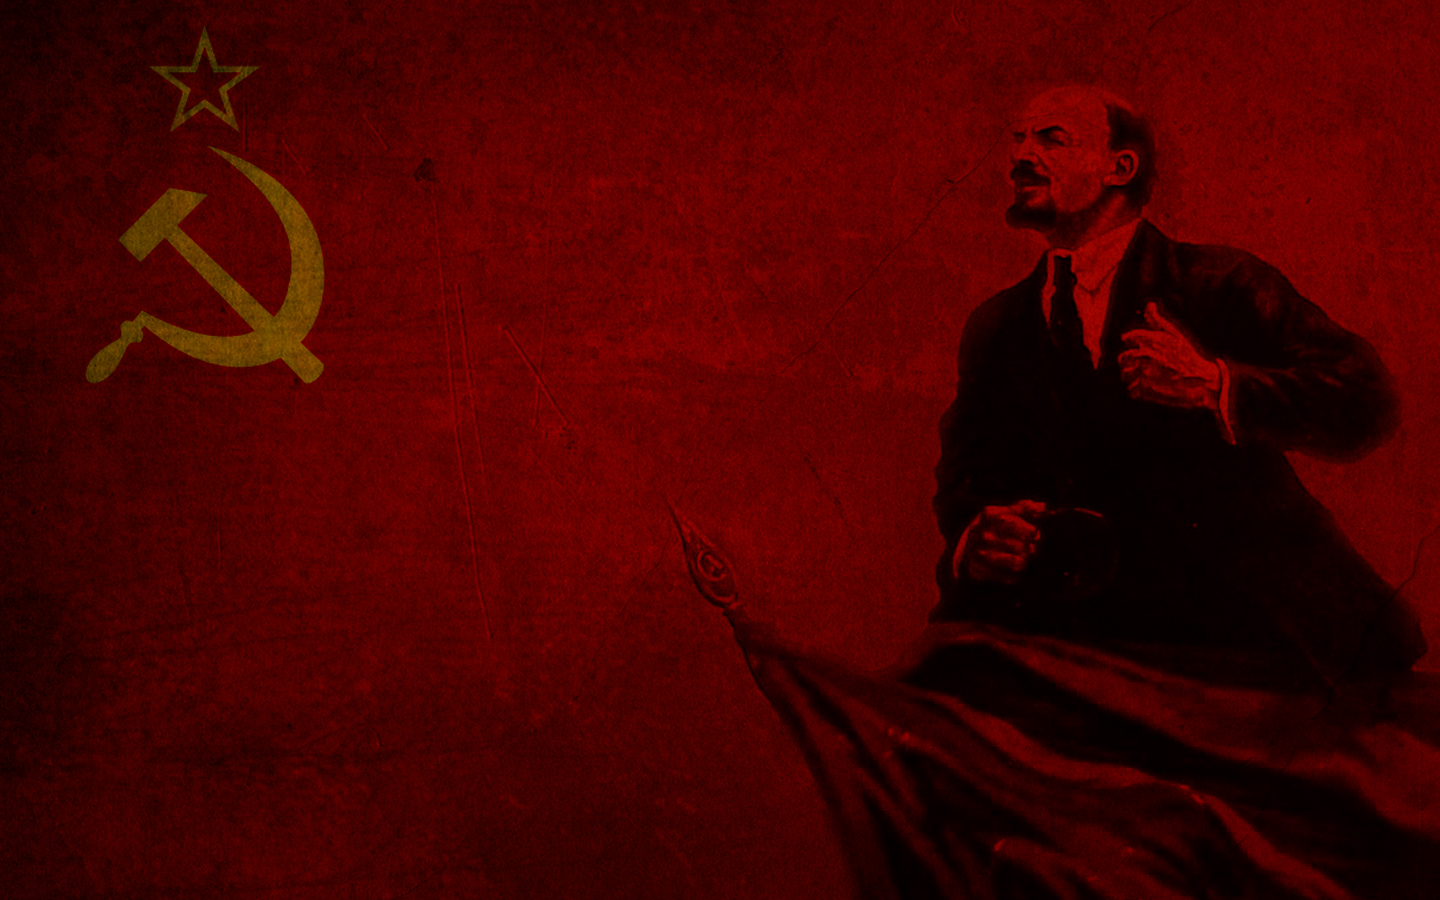 Lenin Ussr Image The Munist Party Mod Db